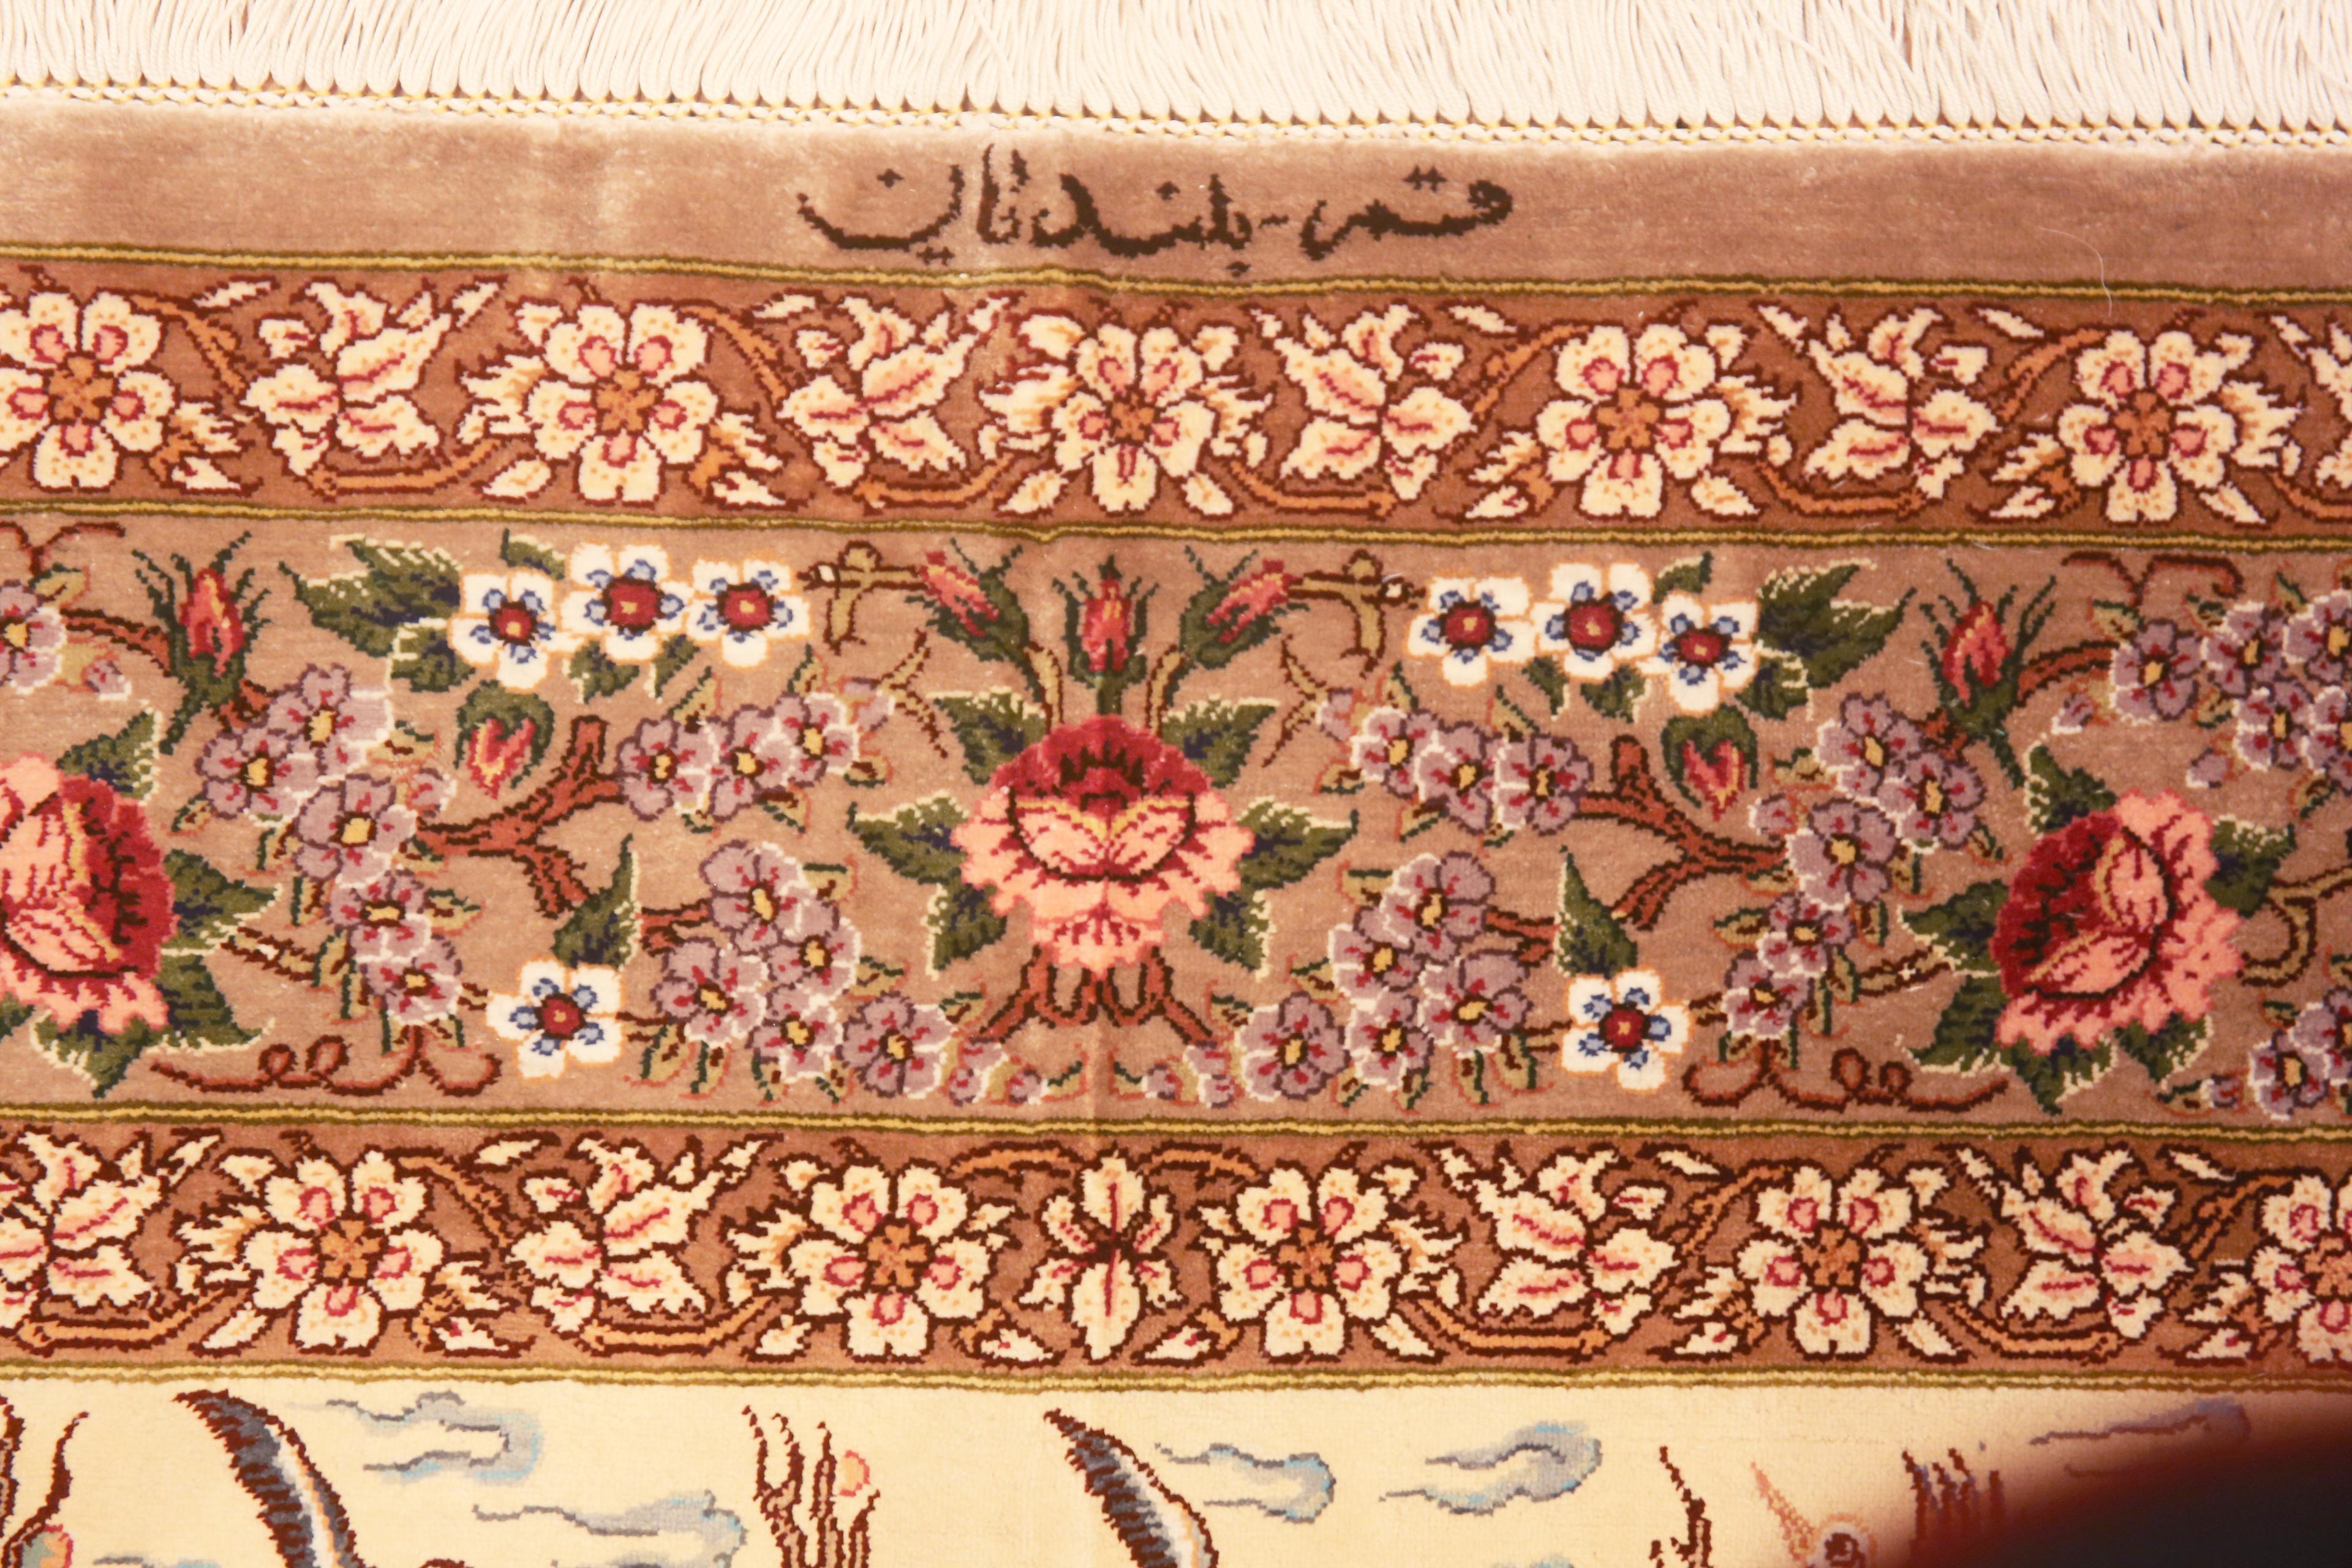 Artful Small Artistic Tree of Life Animal Design Vintage Persian Silk Qum Luxury Rug, country of origin: Persian Rugs, Circa date: Vintage 